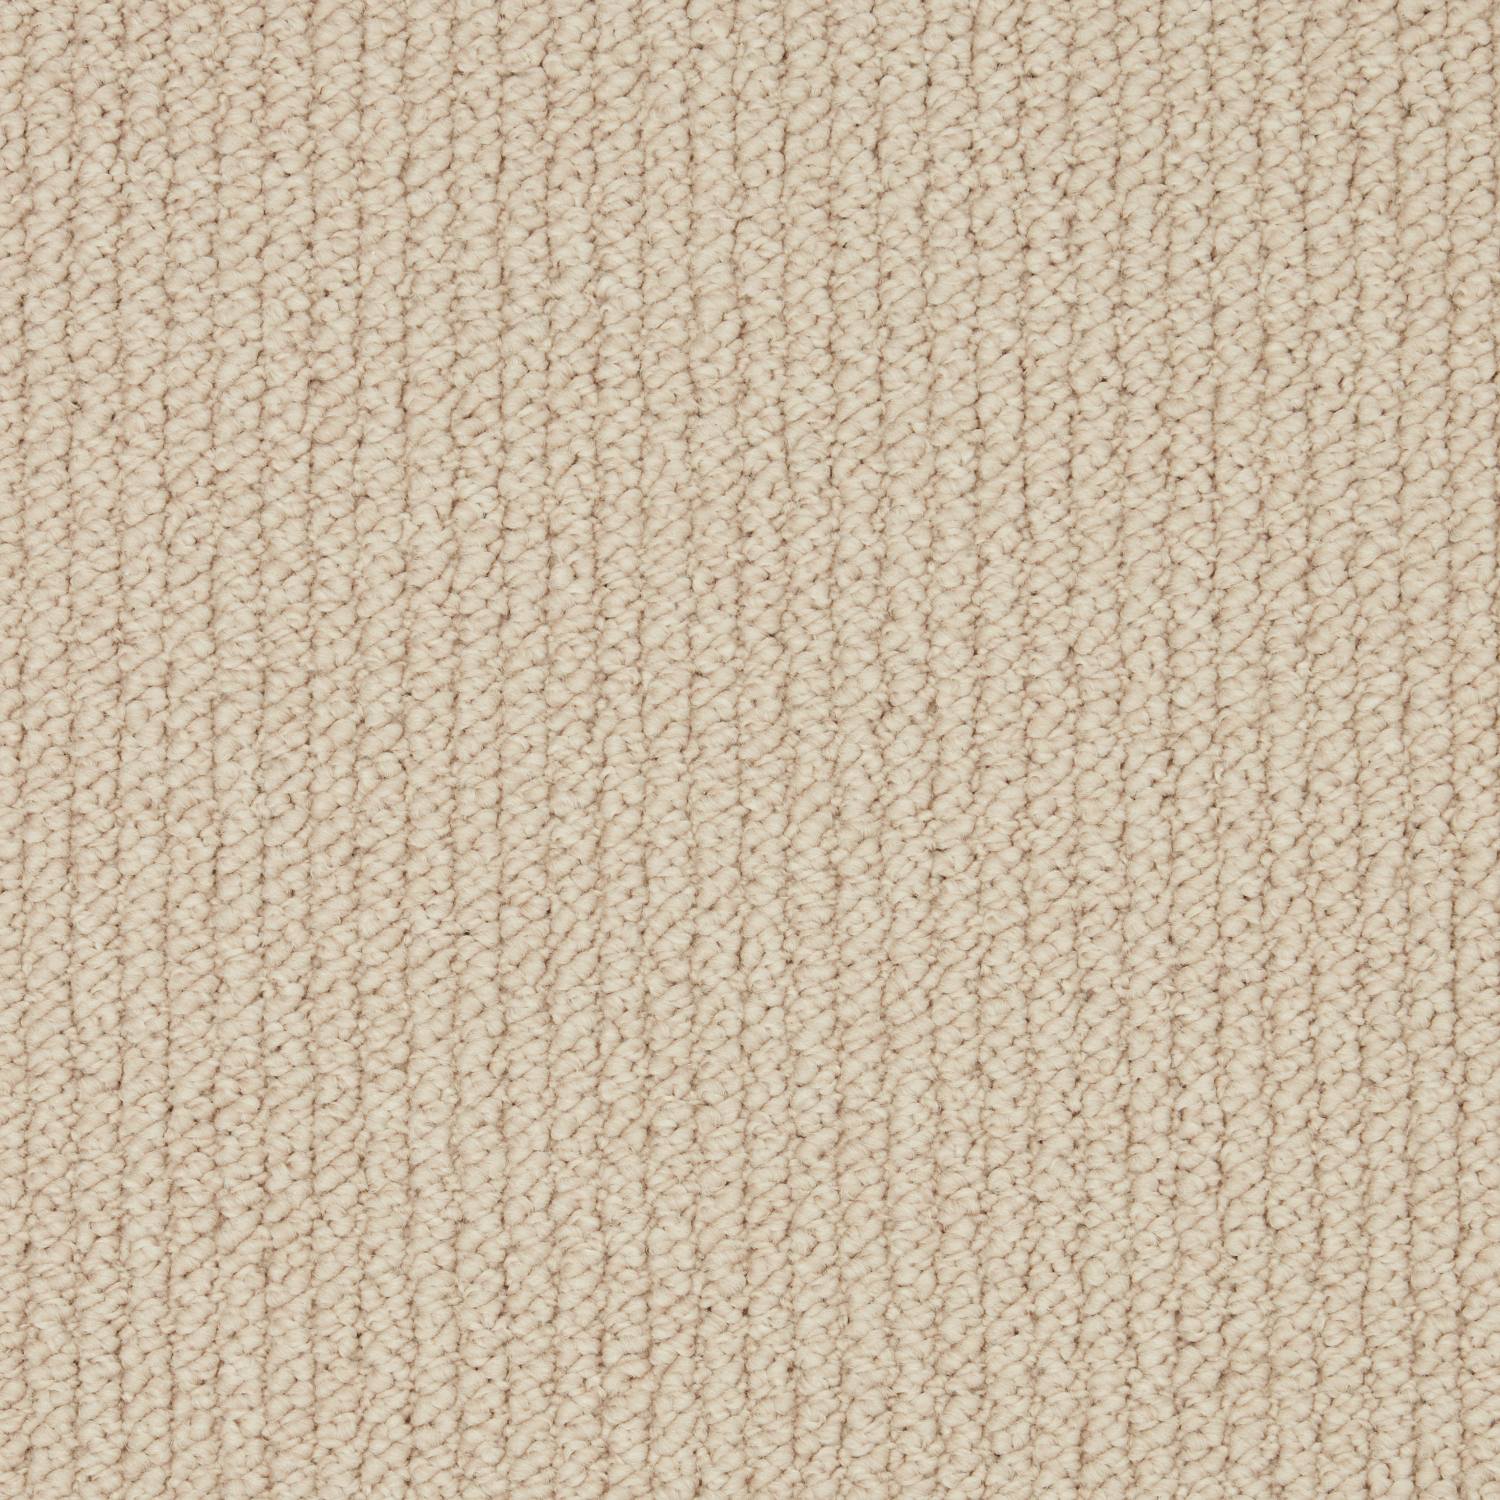 Rural Textures Loop Carpet - Truffle Oil Ribbed